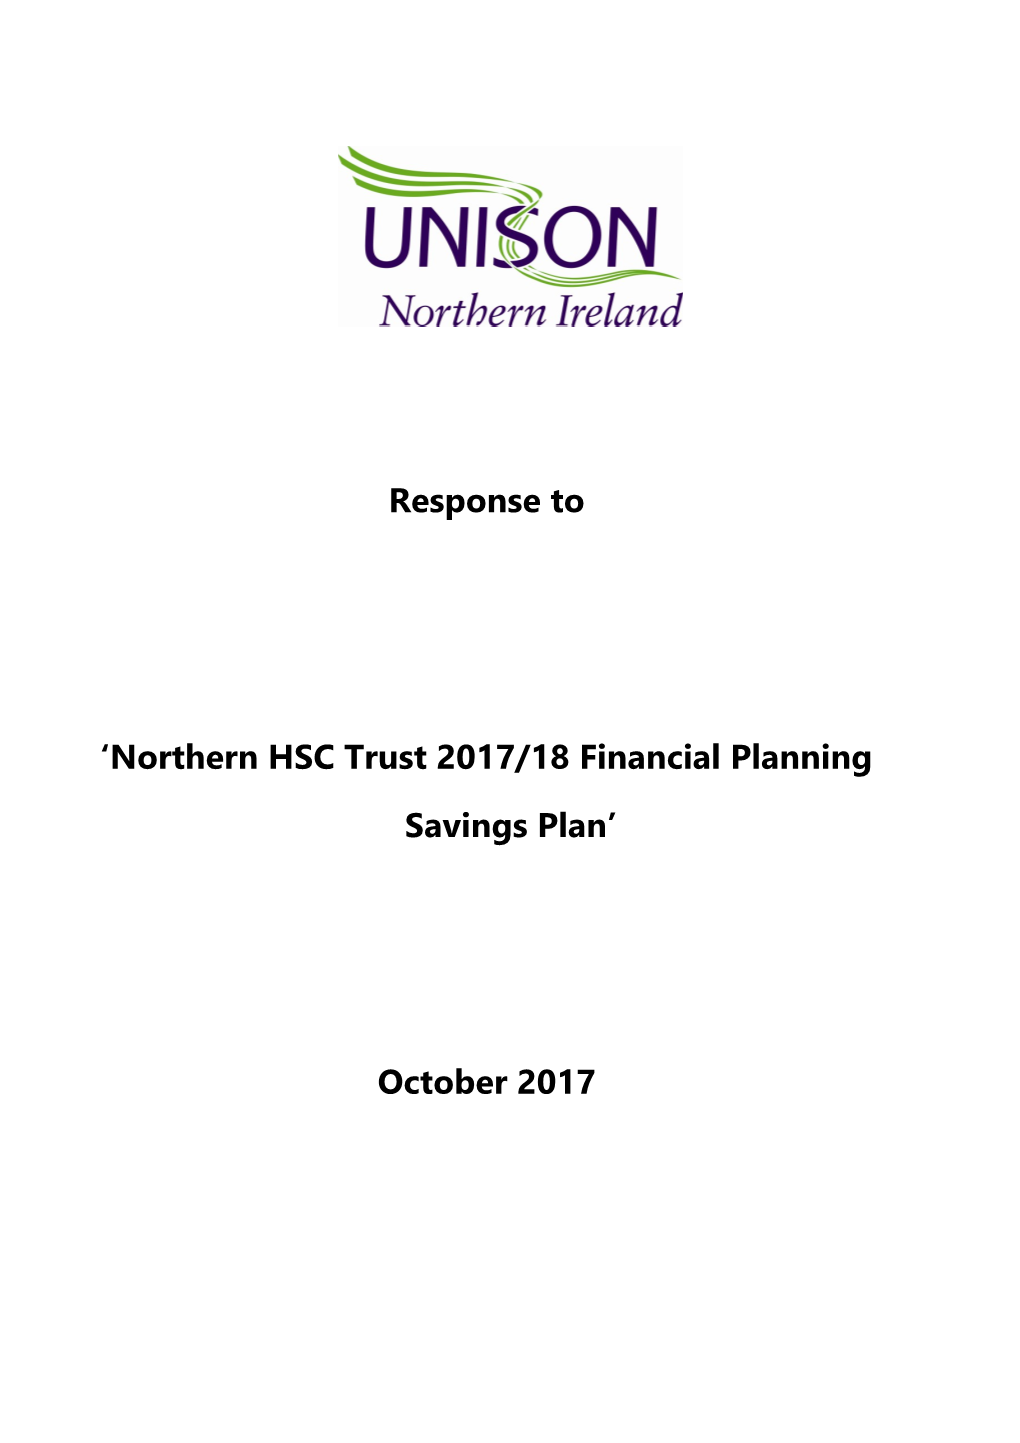 Northern HSC Trust 2017/18 Financial Planning Savings Plan